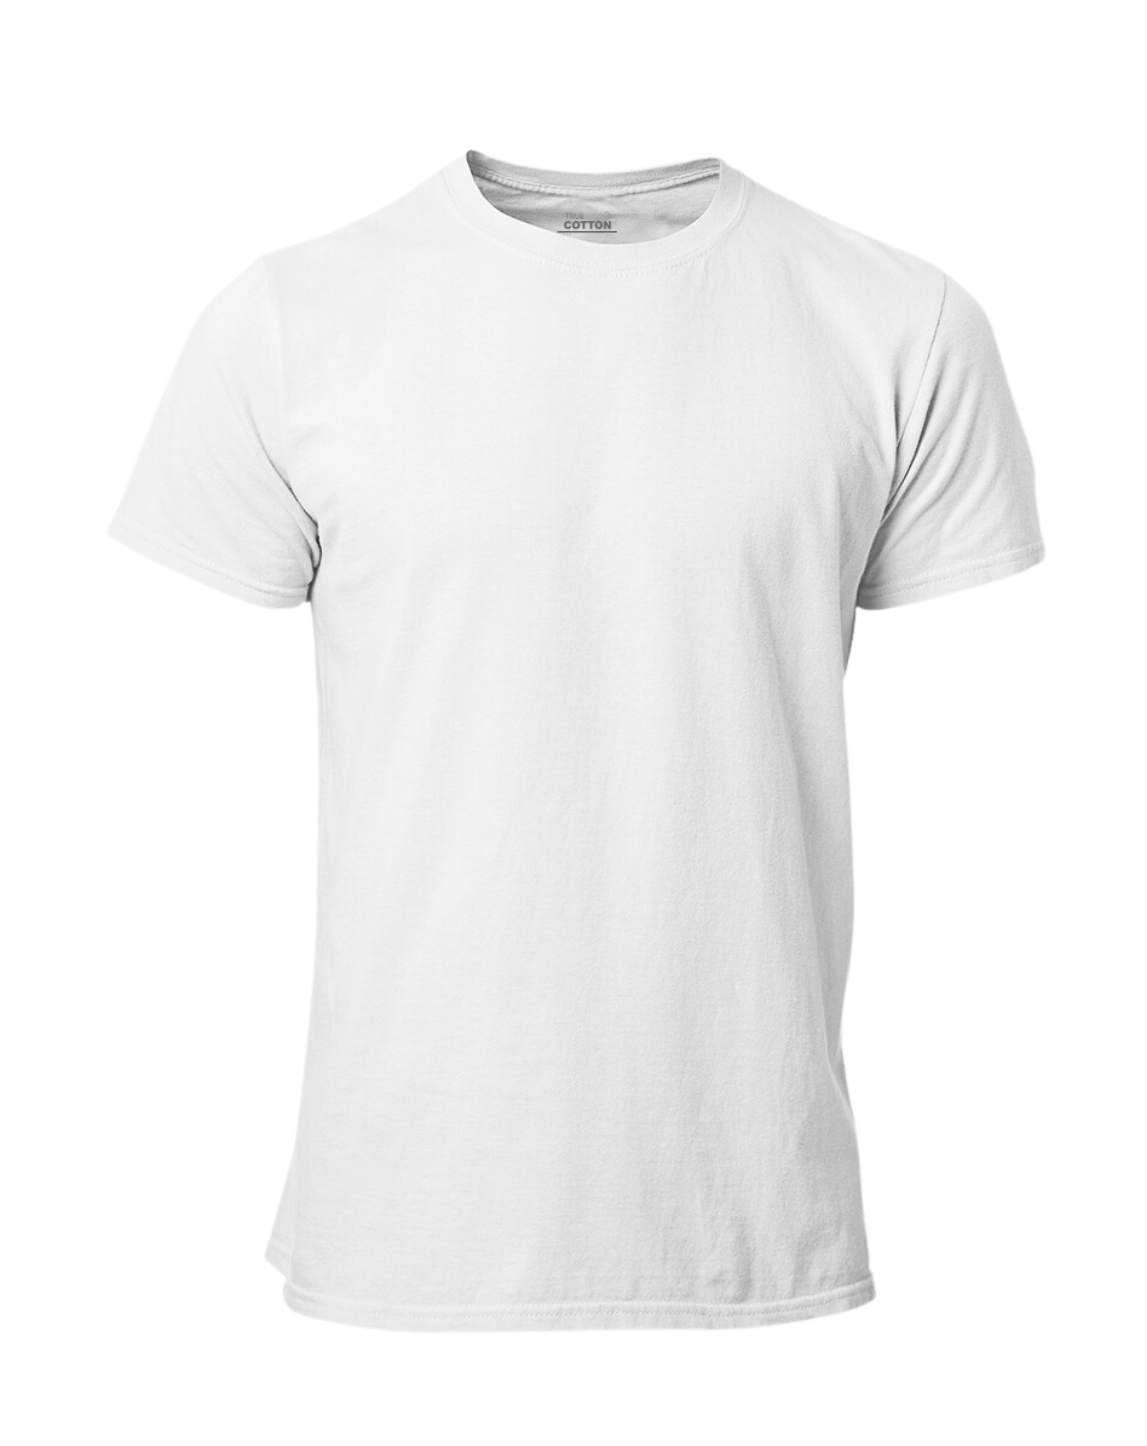 Men's 100% Cotton Premium Round Neck Tshirts - White